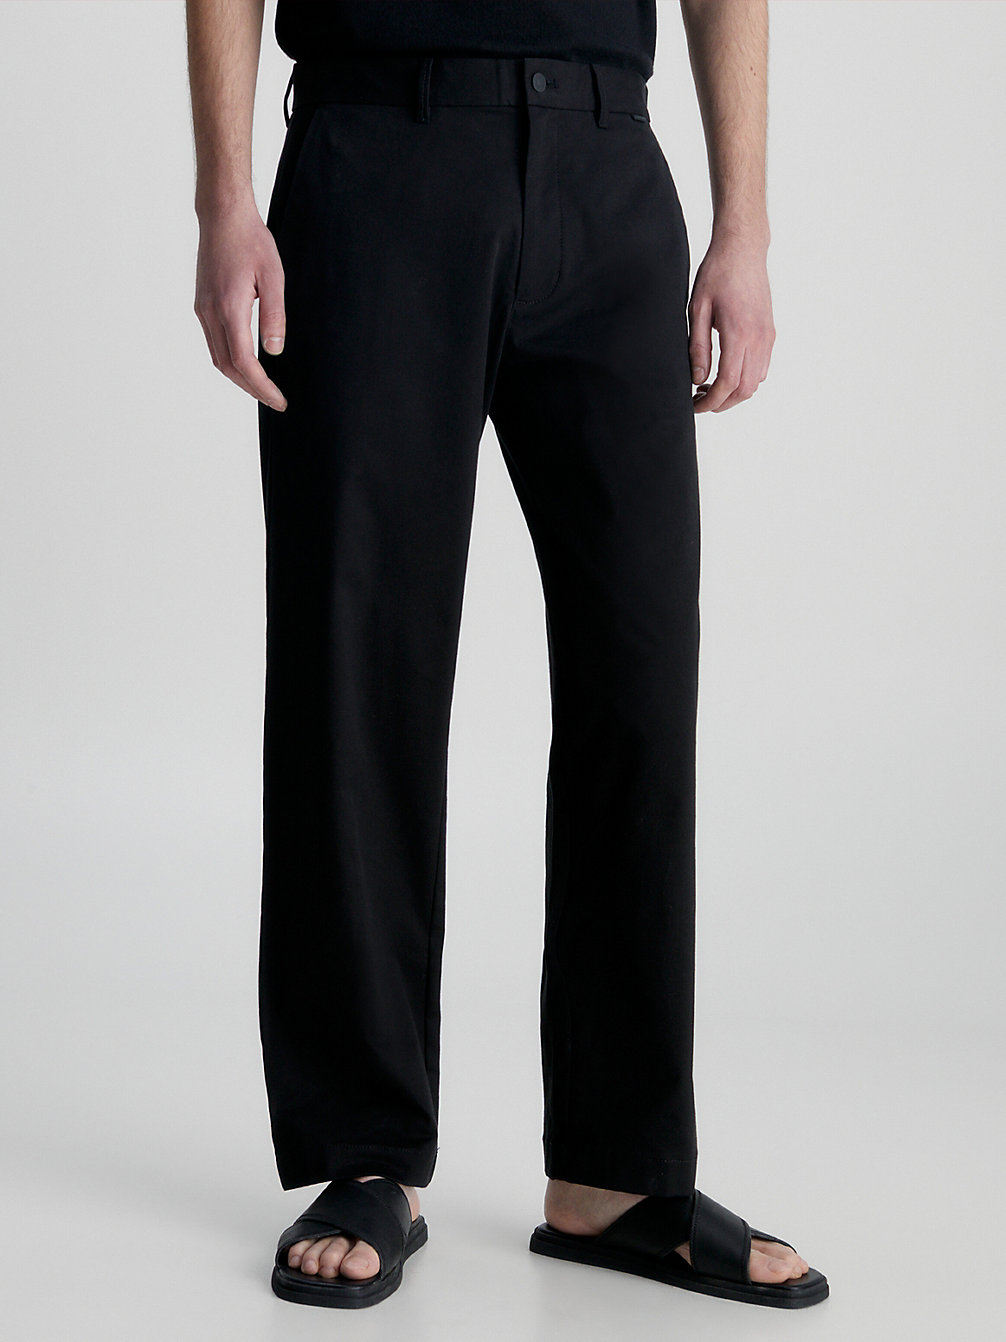 Pantaloni In Twill Taglio Relaxed > CK BLACK > undefined uomo > Calvin Klein